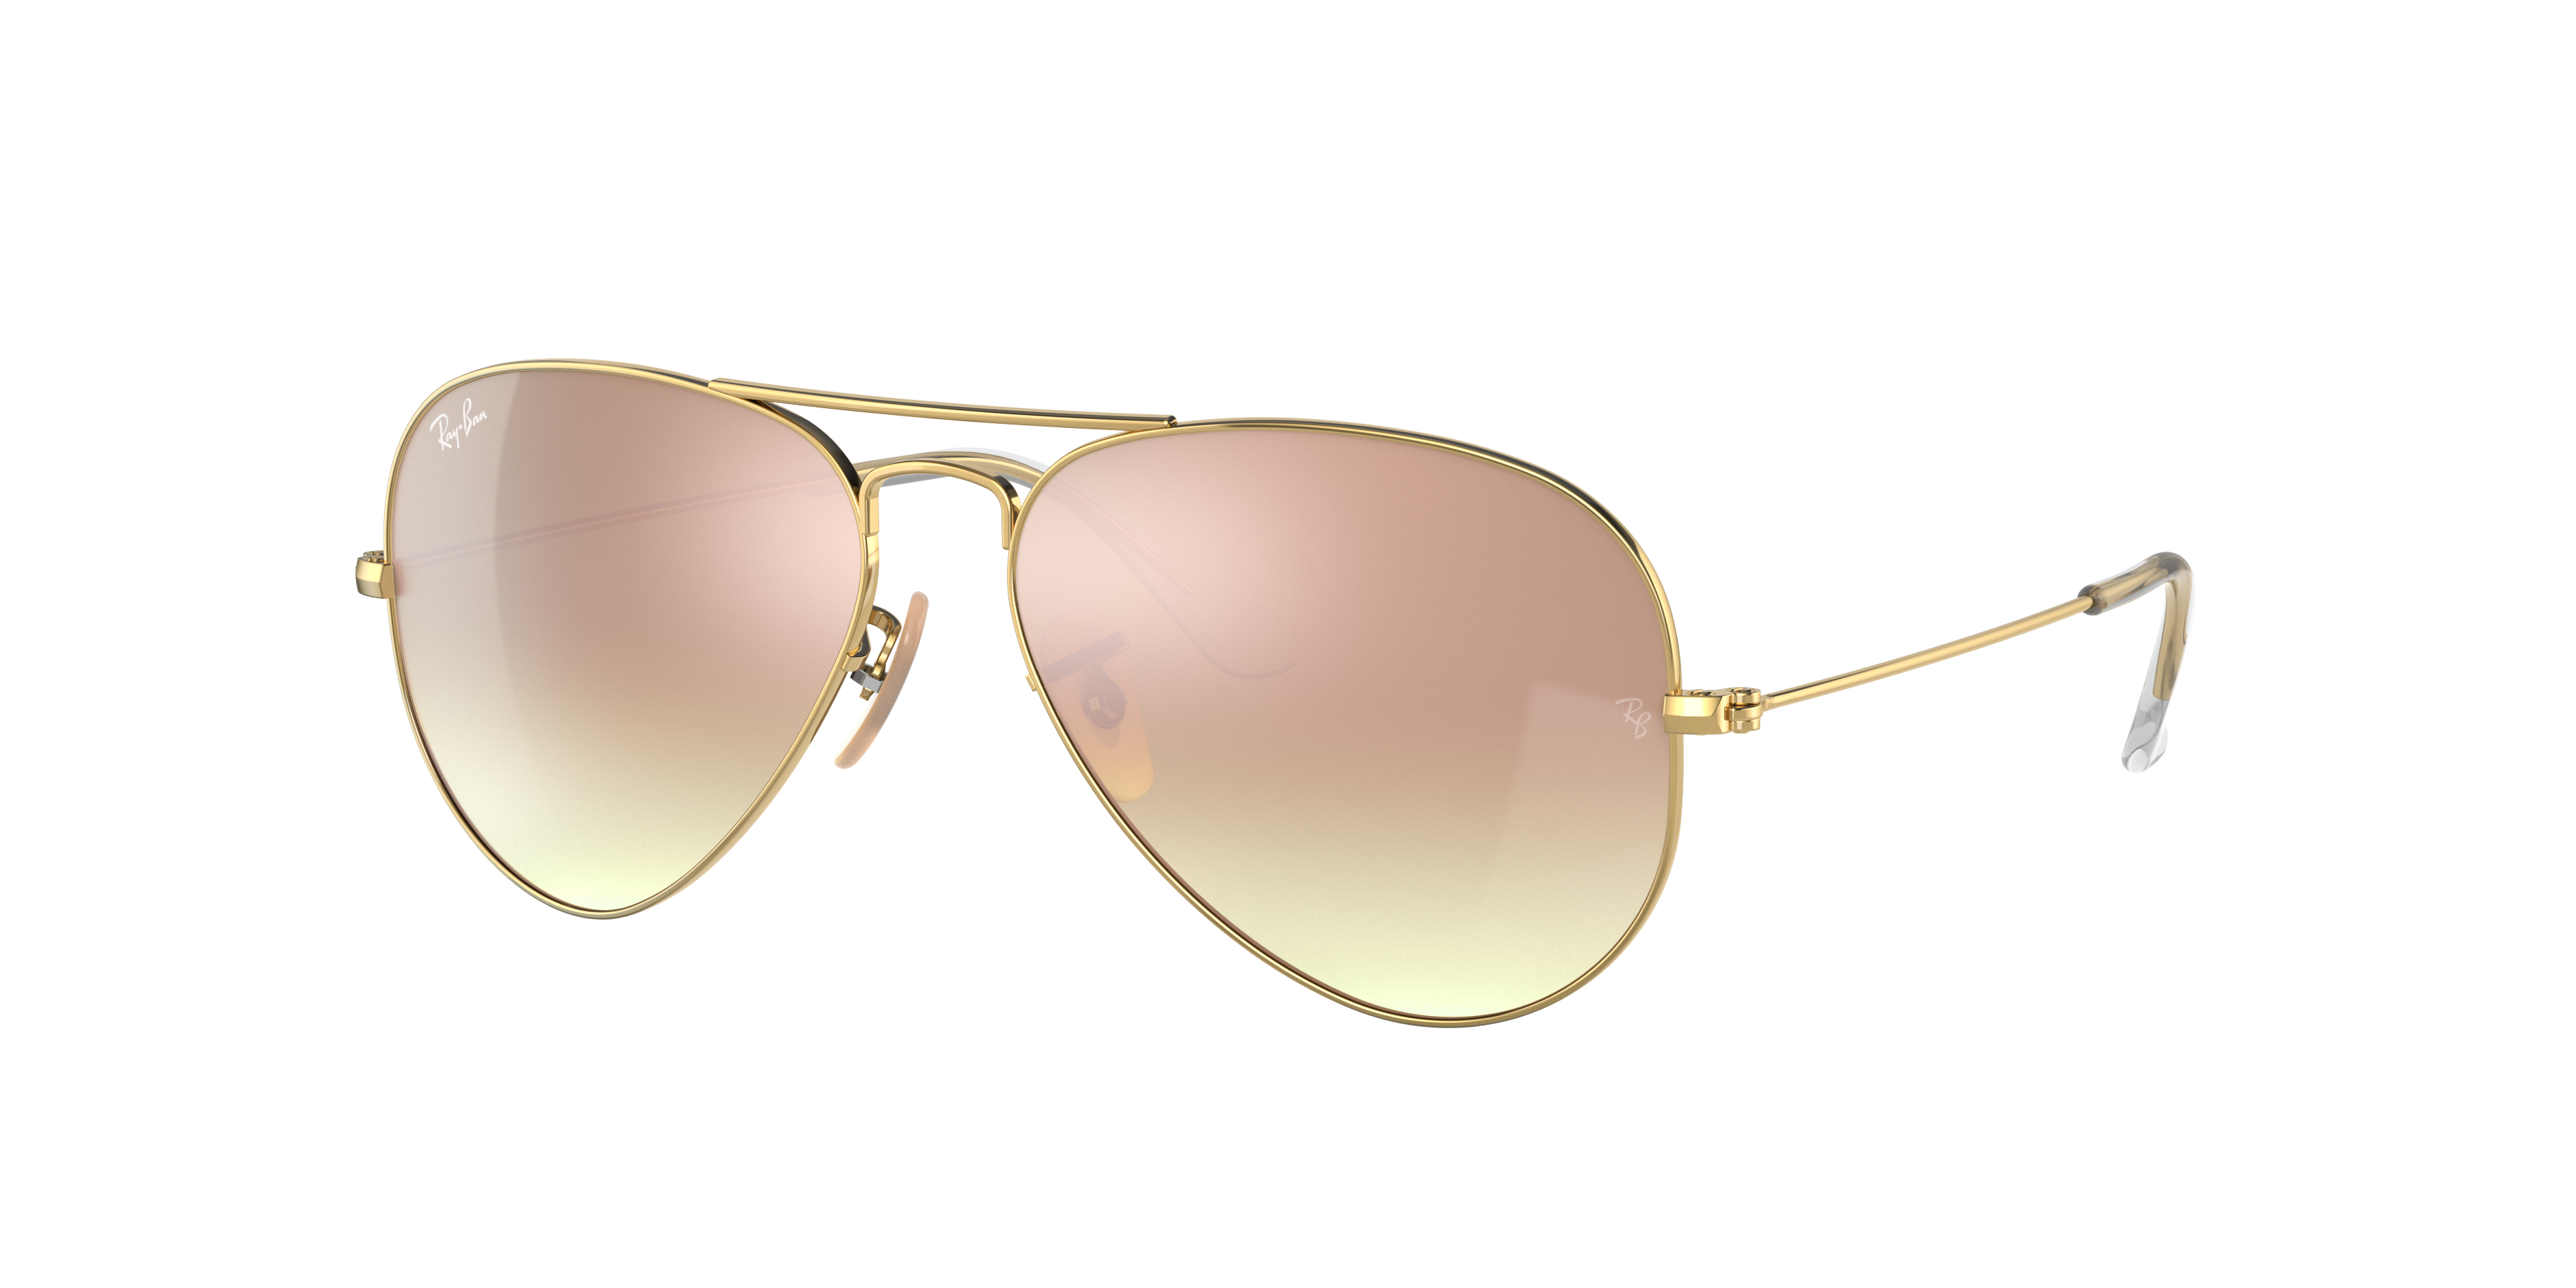 Bourgeon kopi damp Aviator Mirror Sunglasses in Gold and Pink | Ray-Ban®